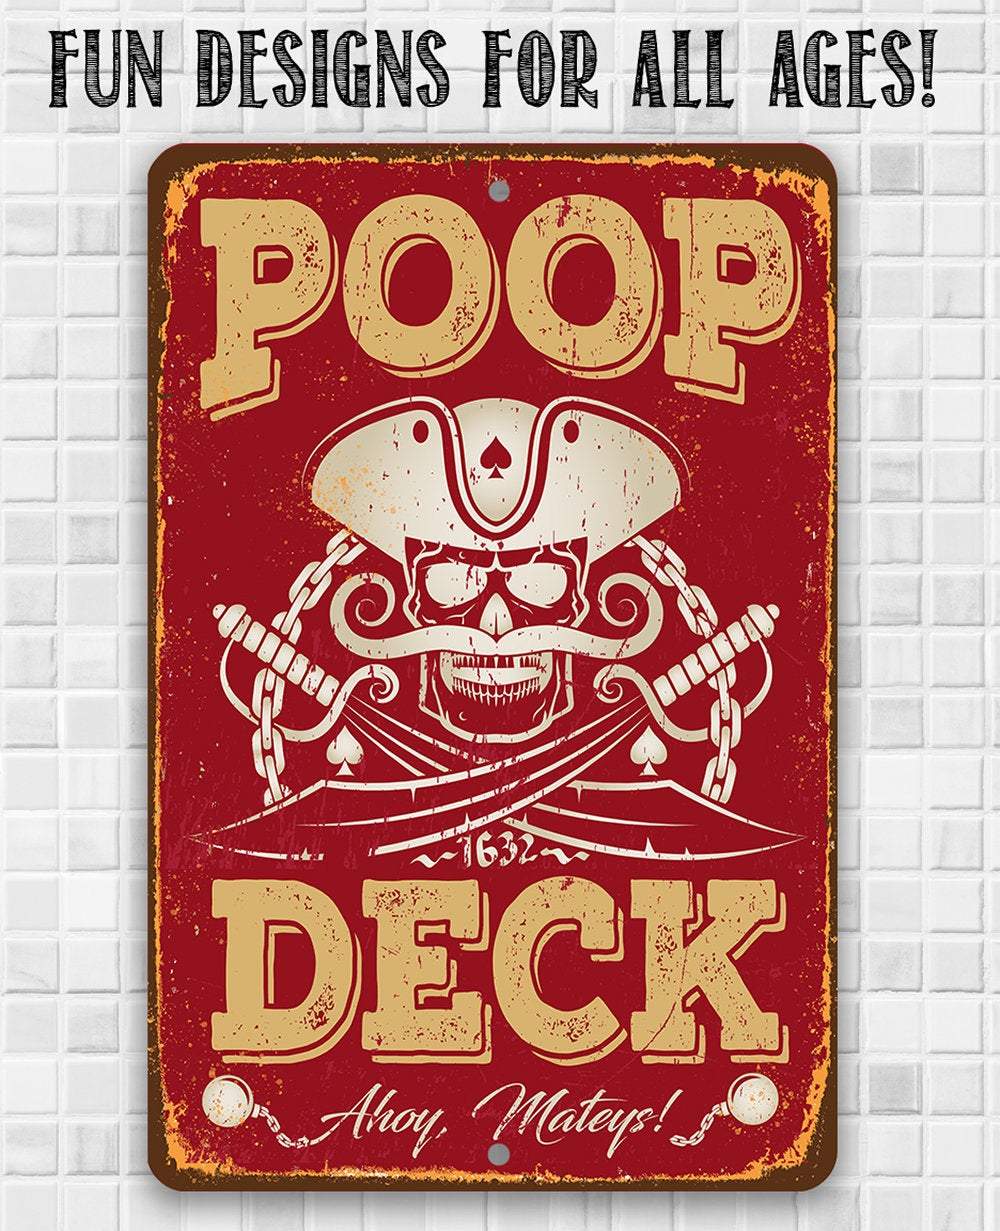 Poop Deck - Metal Sign | Lone Star Art.